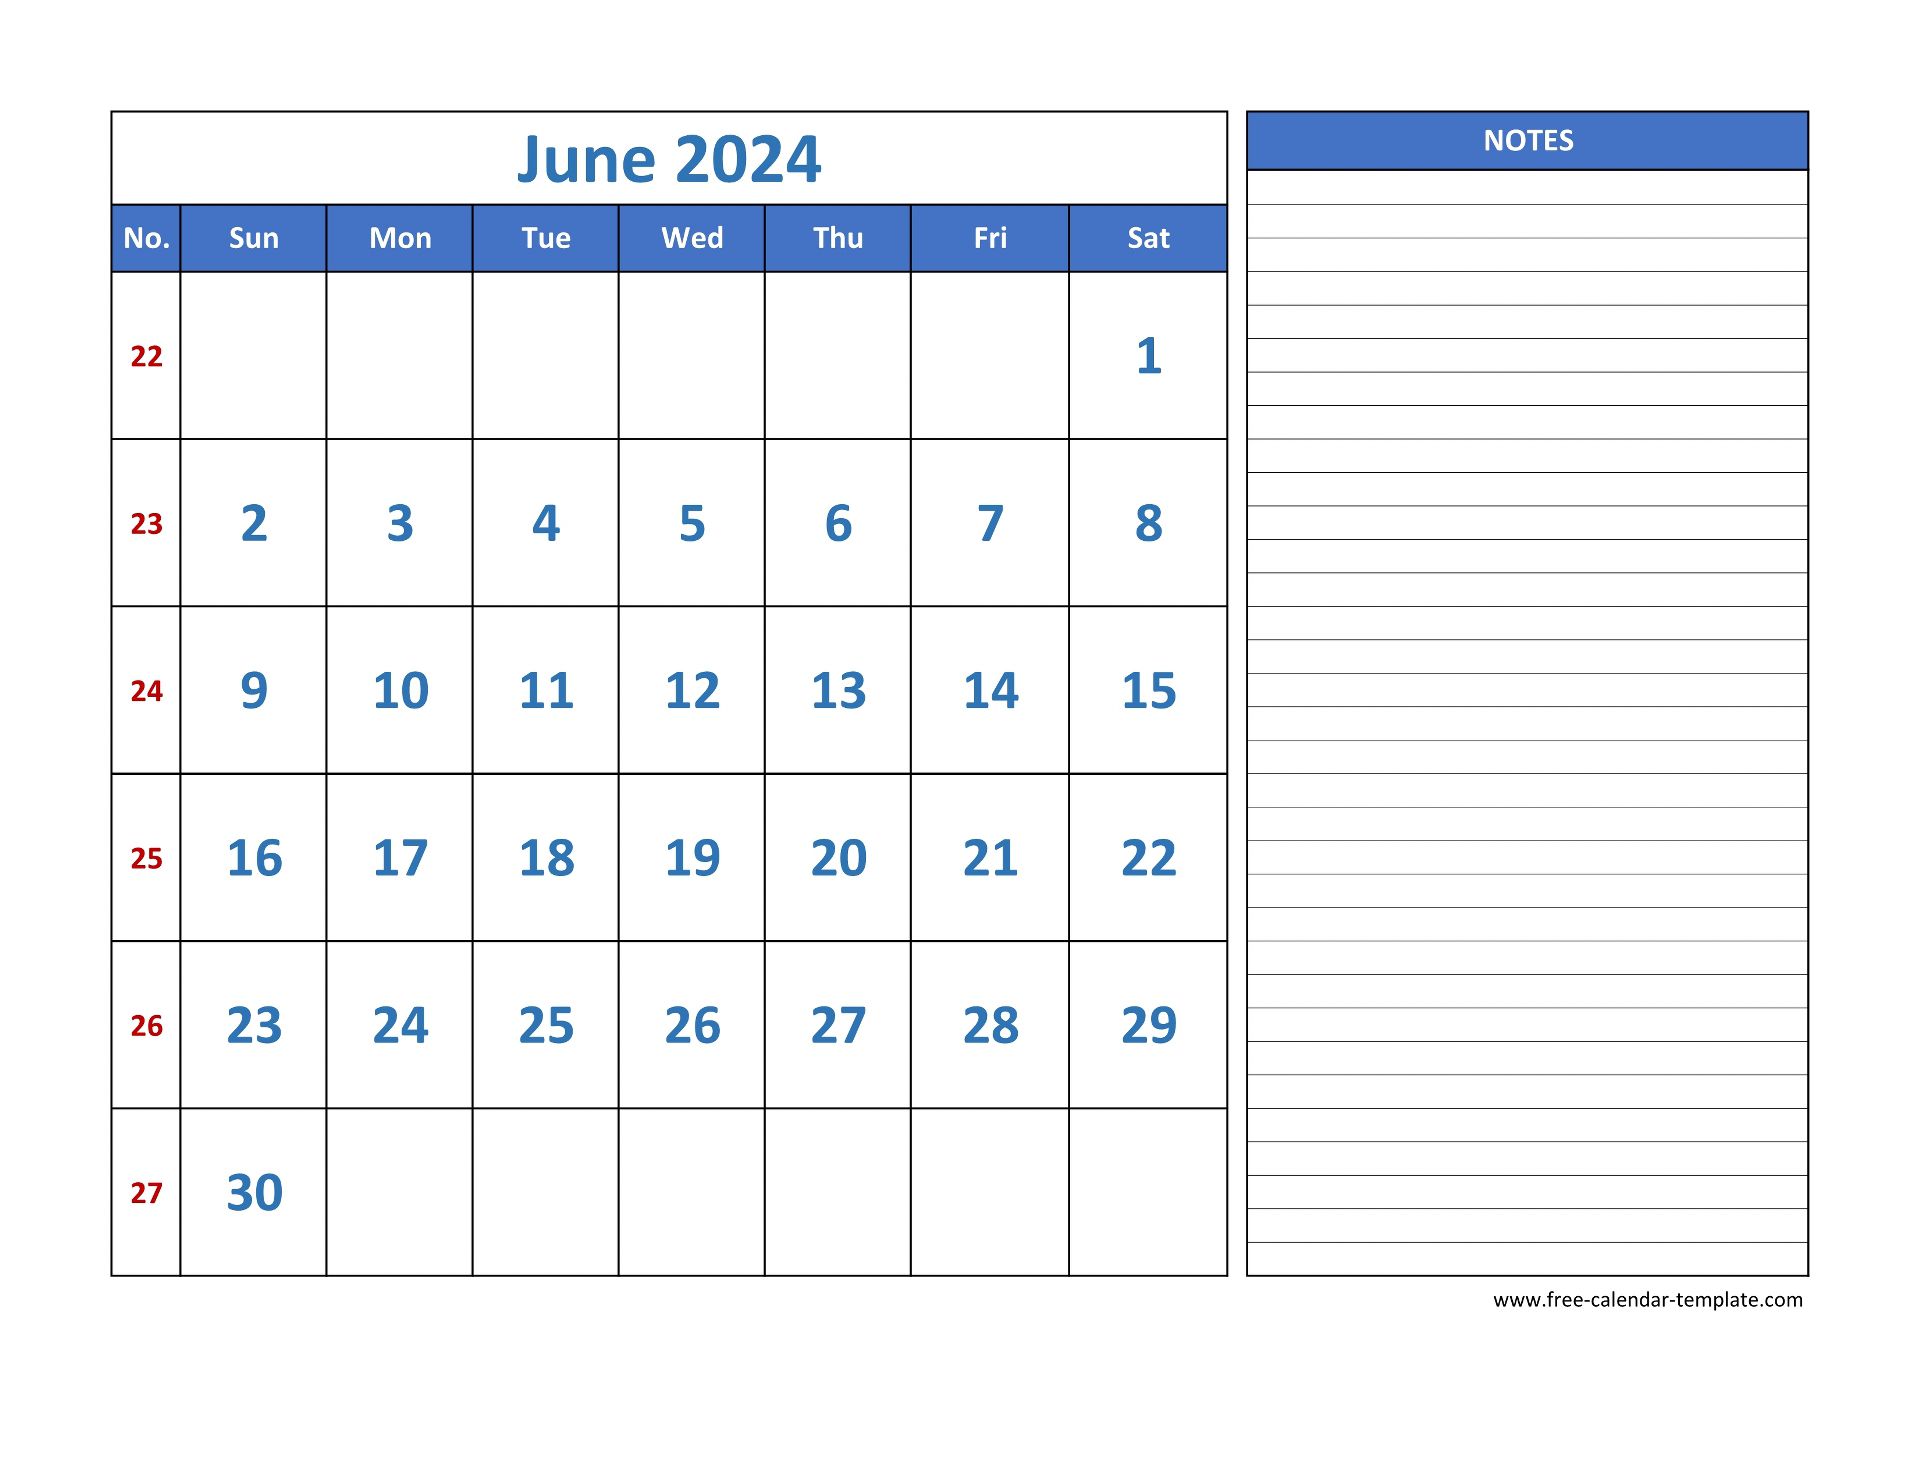 June 2024 Free Calendar Tempplate